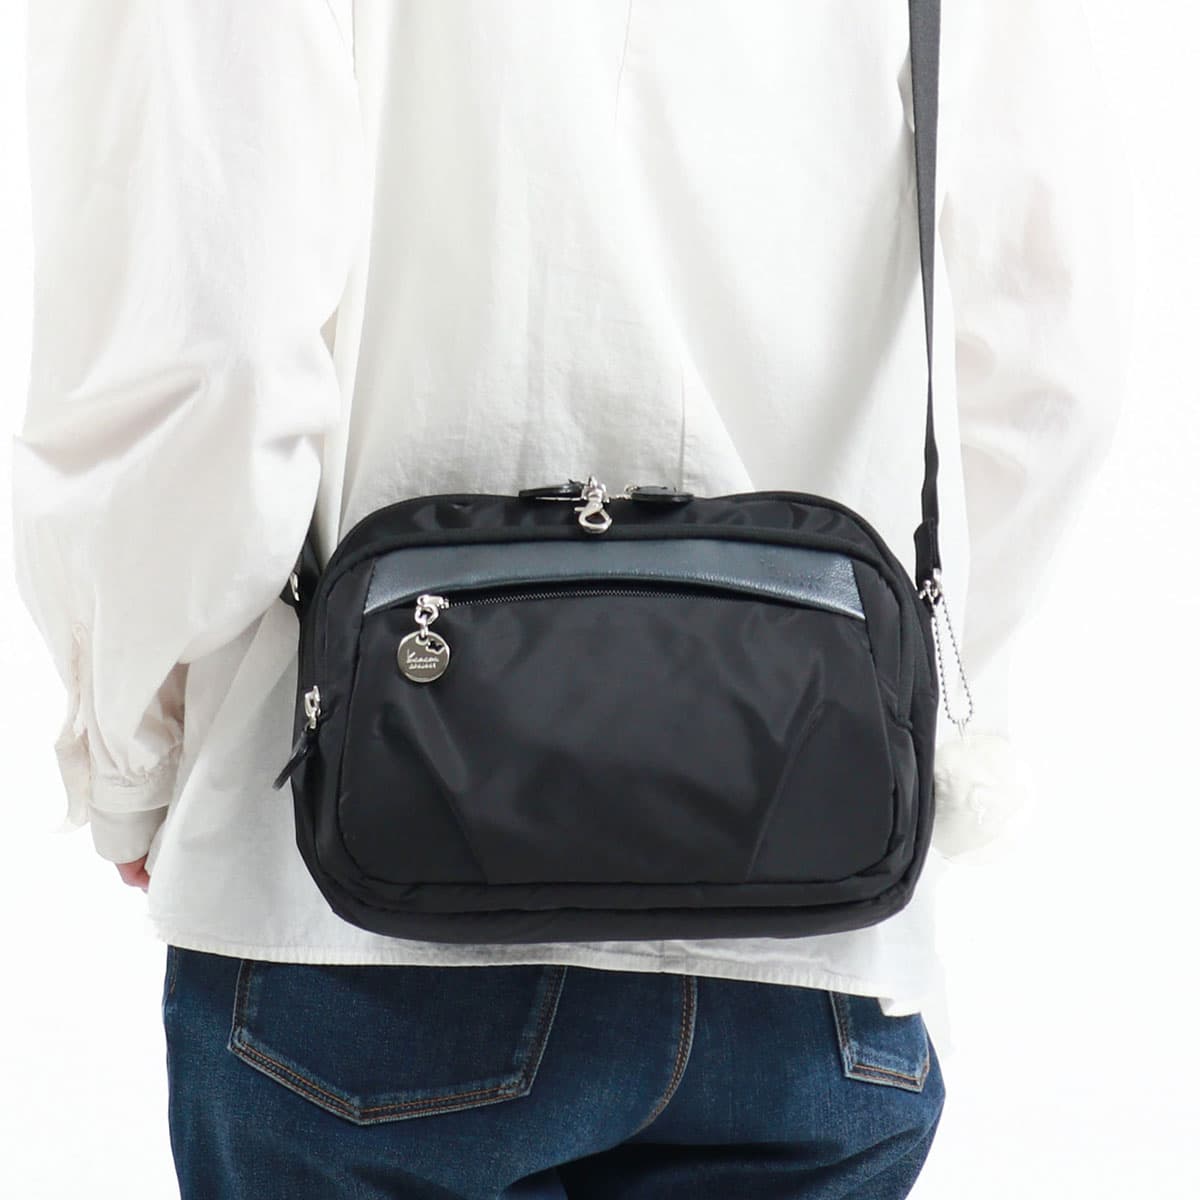 Kanana Project PJ1-Limited Limited Edition Wave (Small) Kanana Backpack  31431